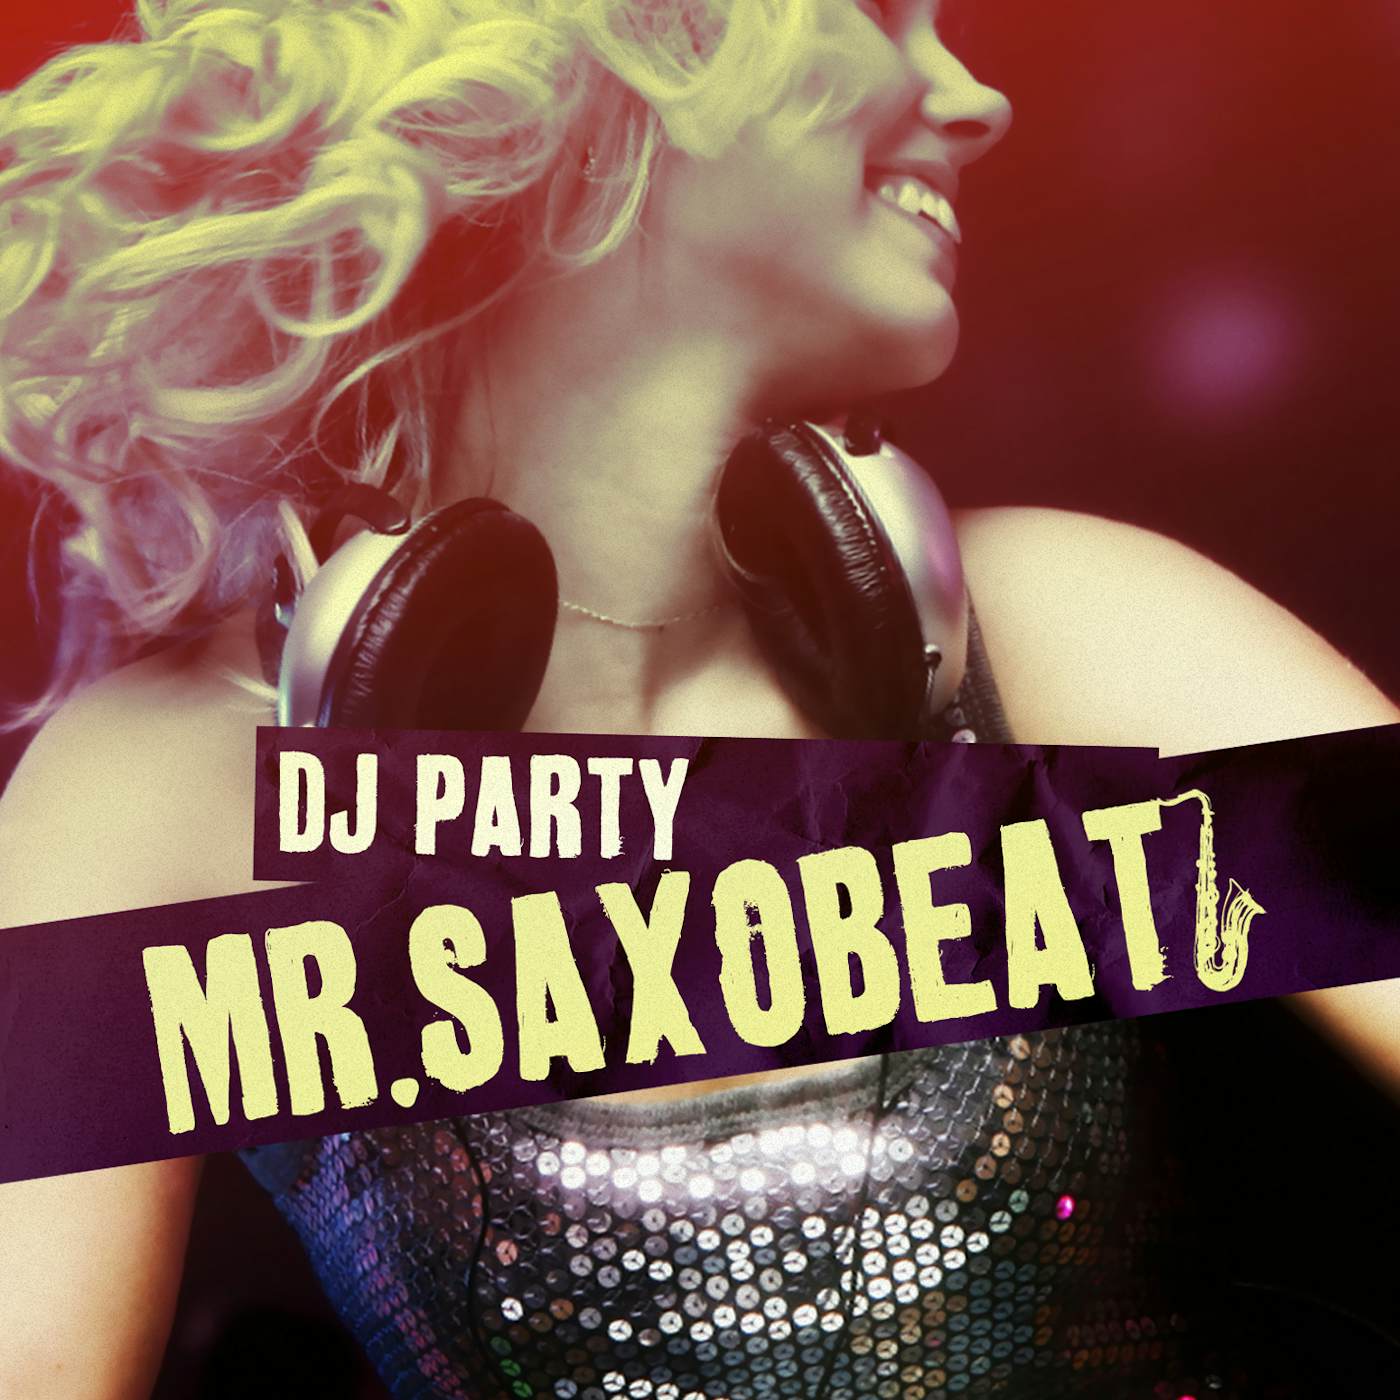 DJ Party MR. SAXOBEAT CD